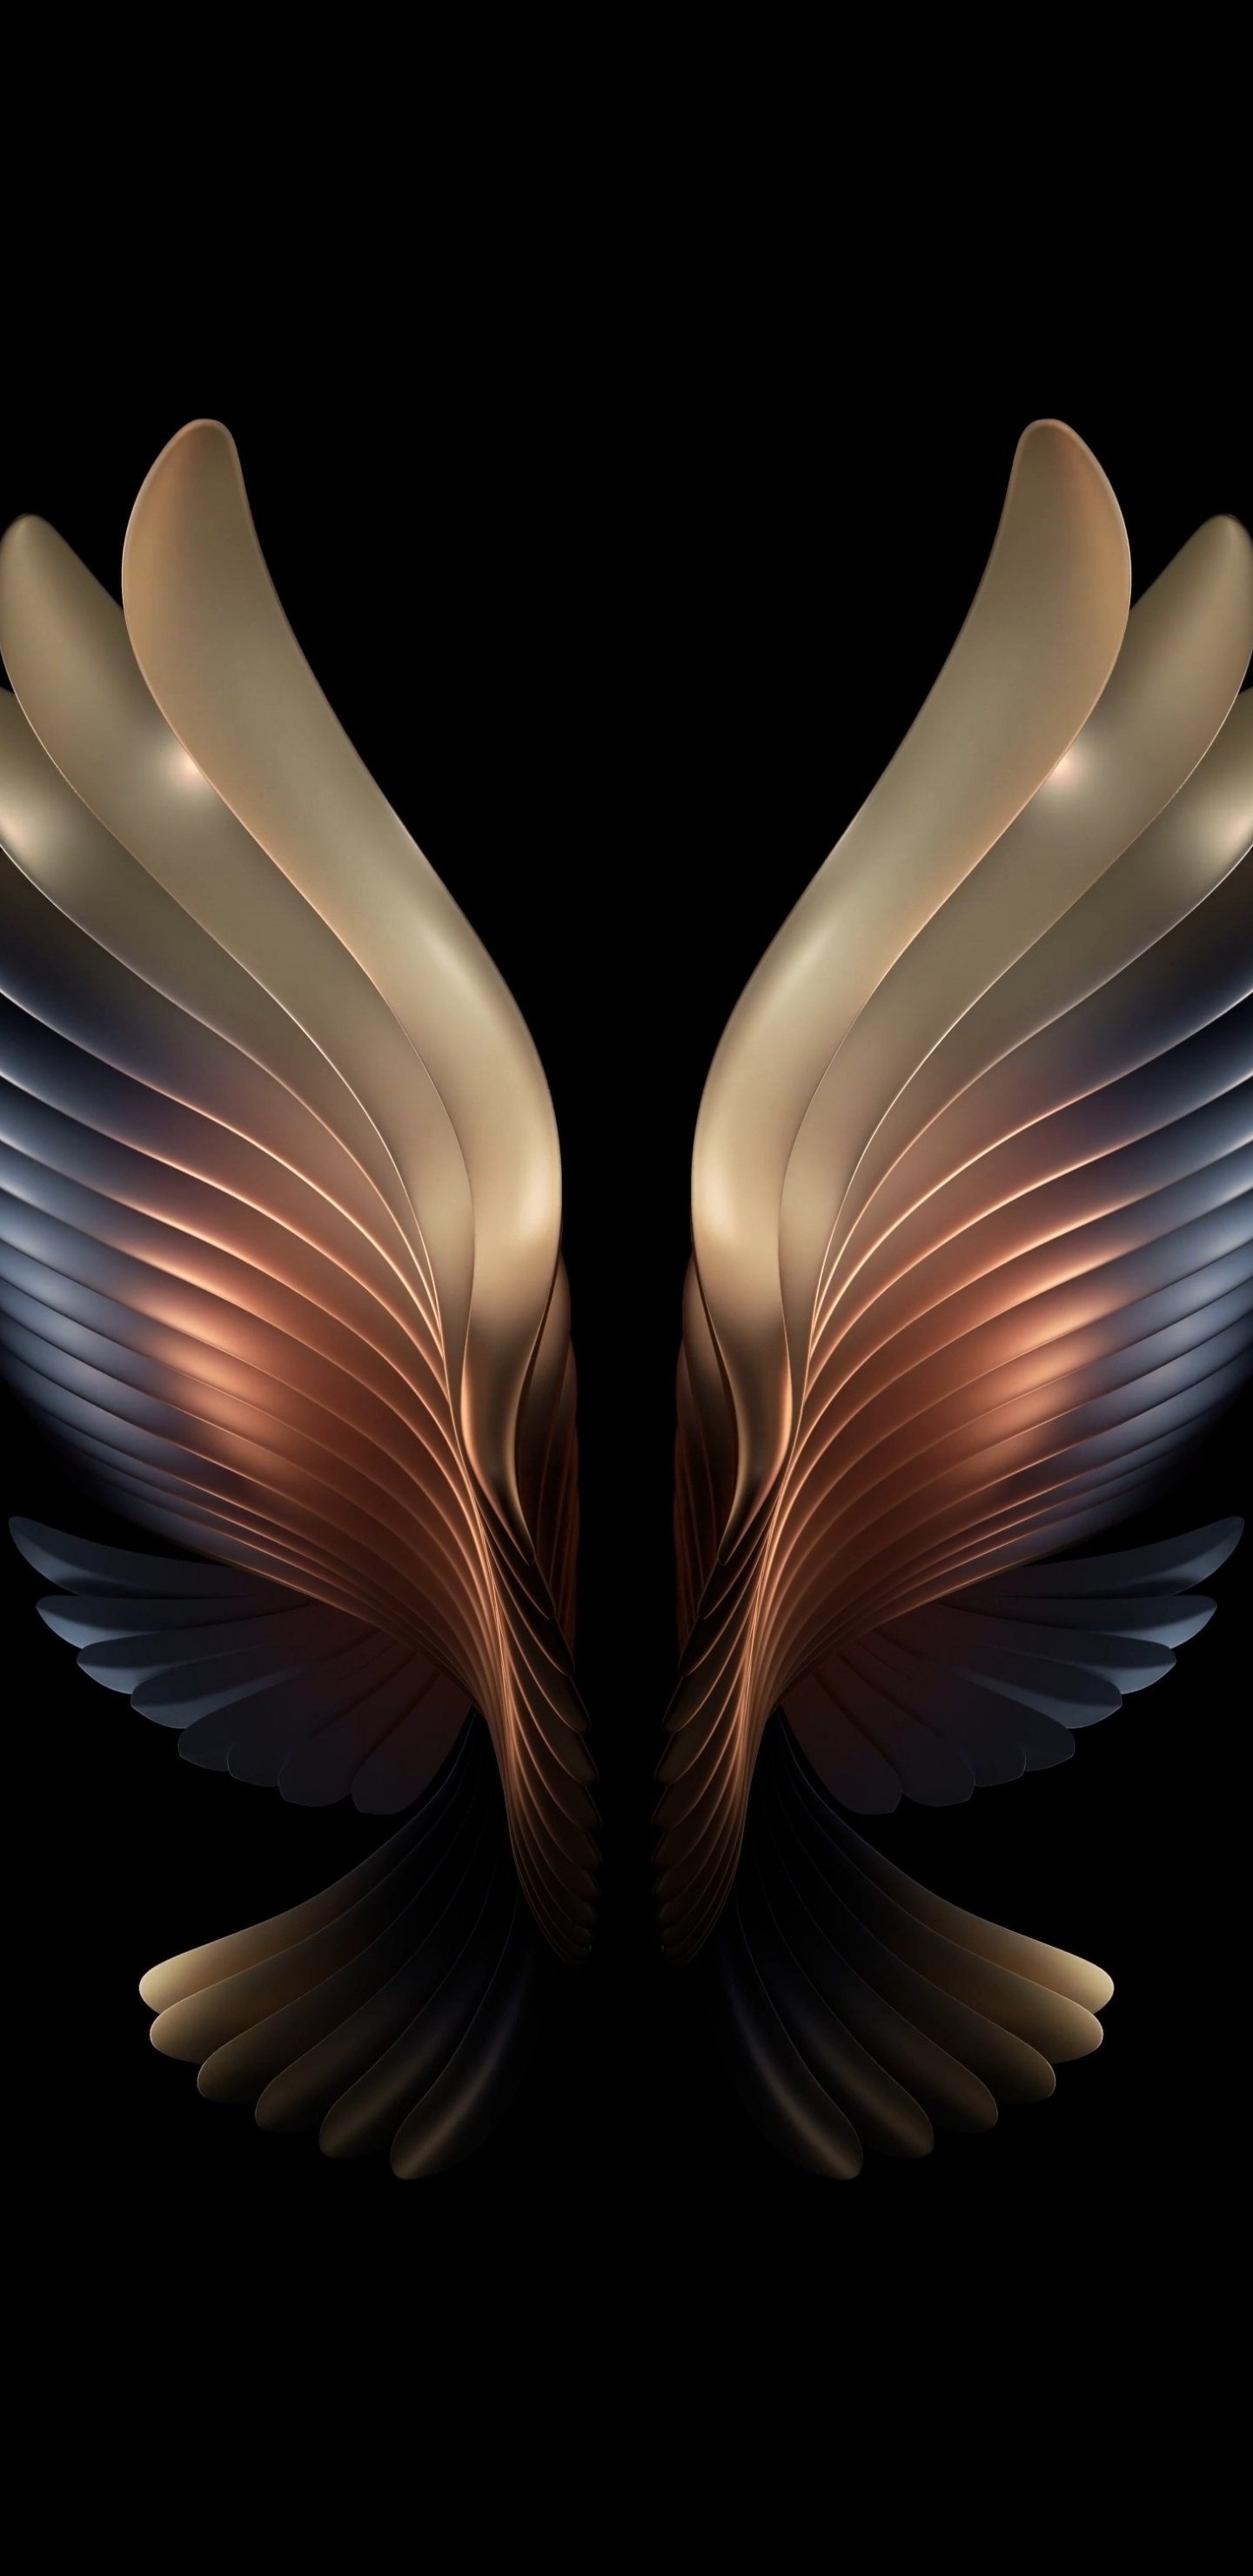 Amoled, angel wings, dark, 1440x2960 wallpaper